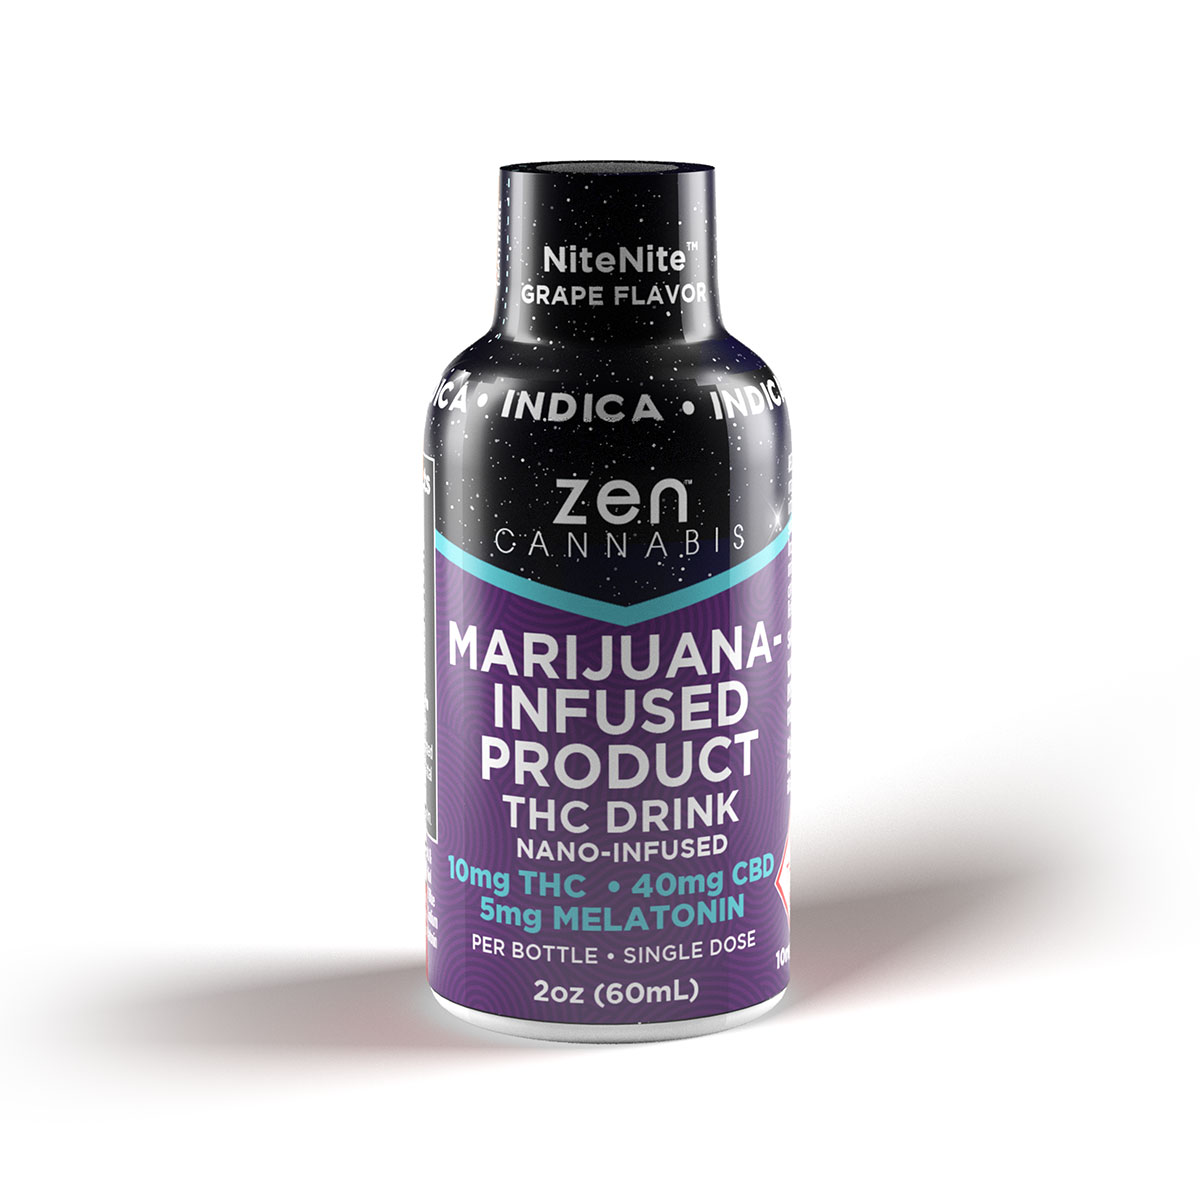 Zen Cannabis Marijuana Product Nano Infused with THC CBD and Melatonin